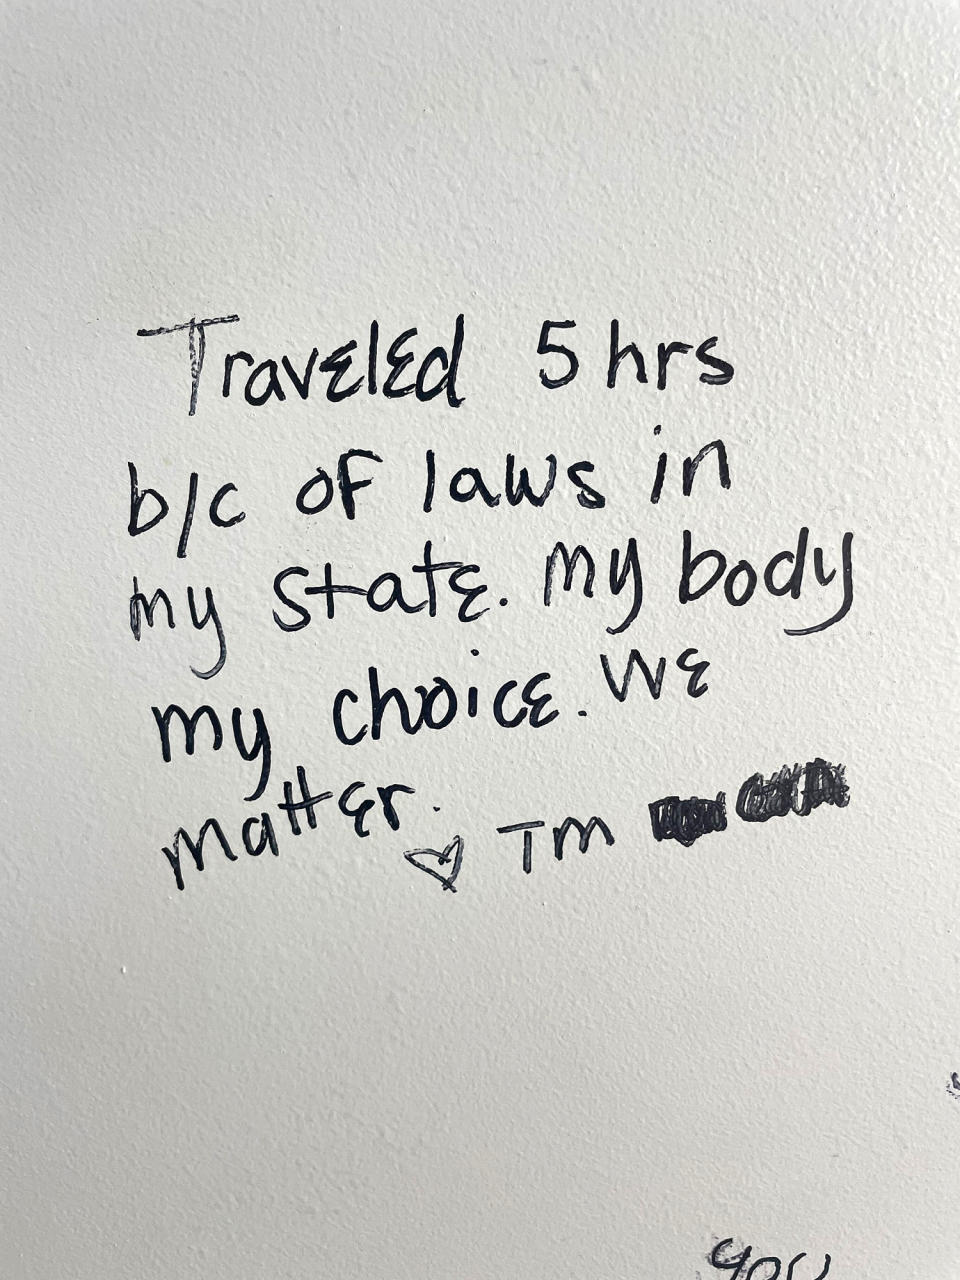 abortion clinic florida bathroom messages (Marissa Parra / NBC News)